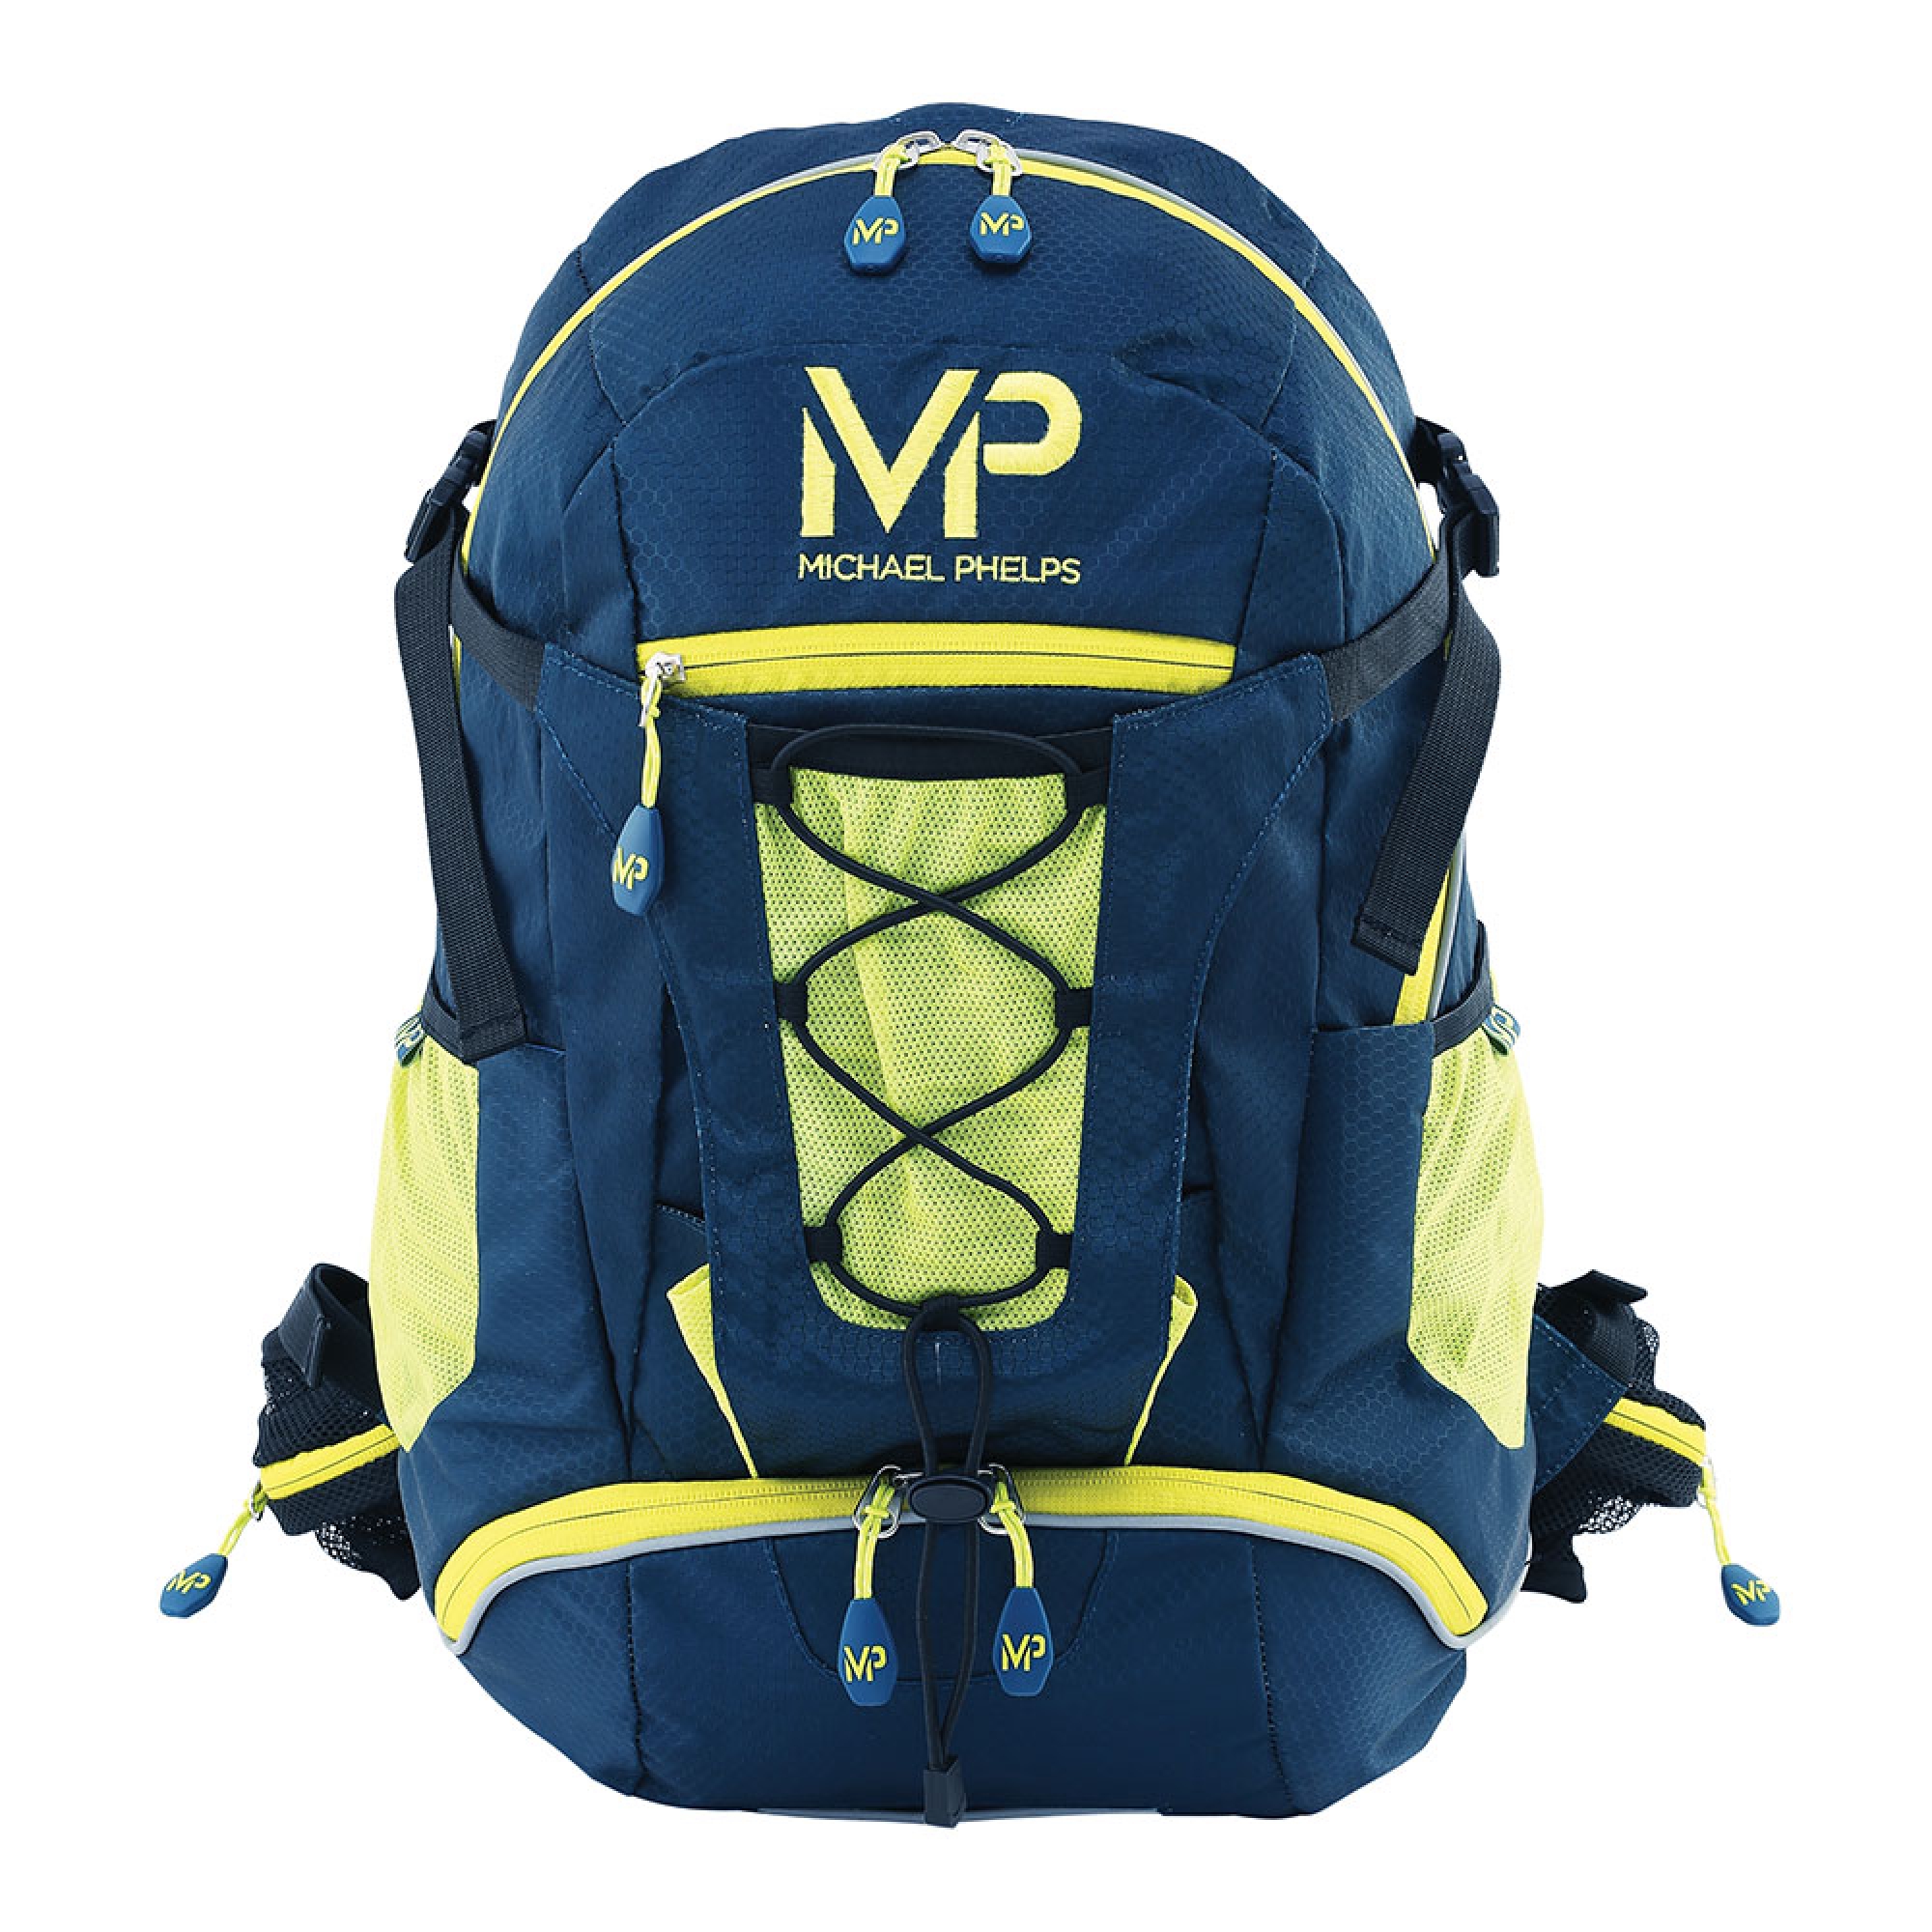 MP Team backpack